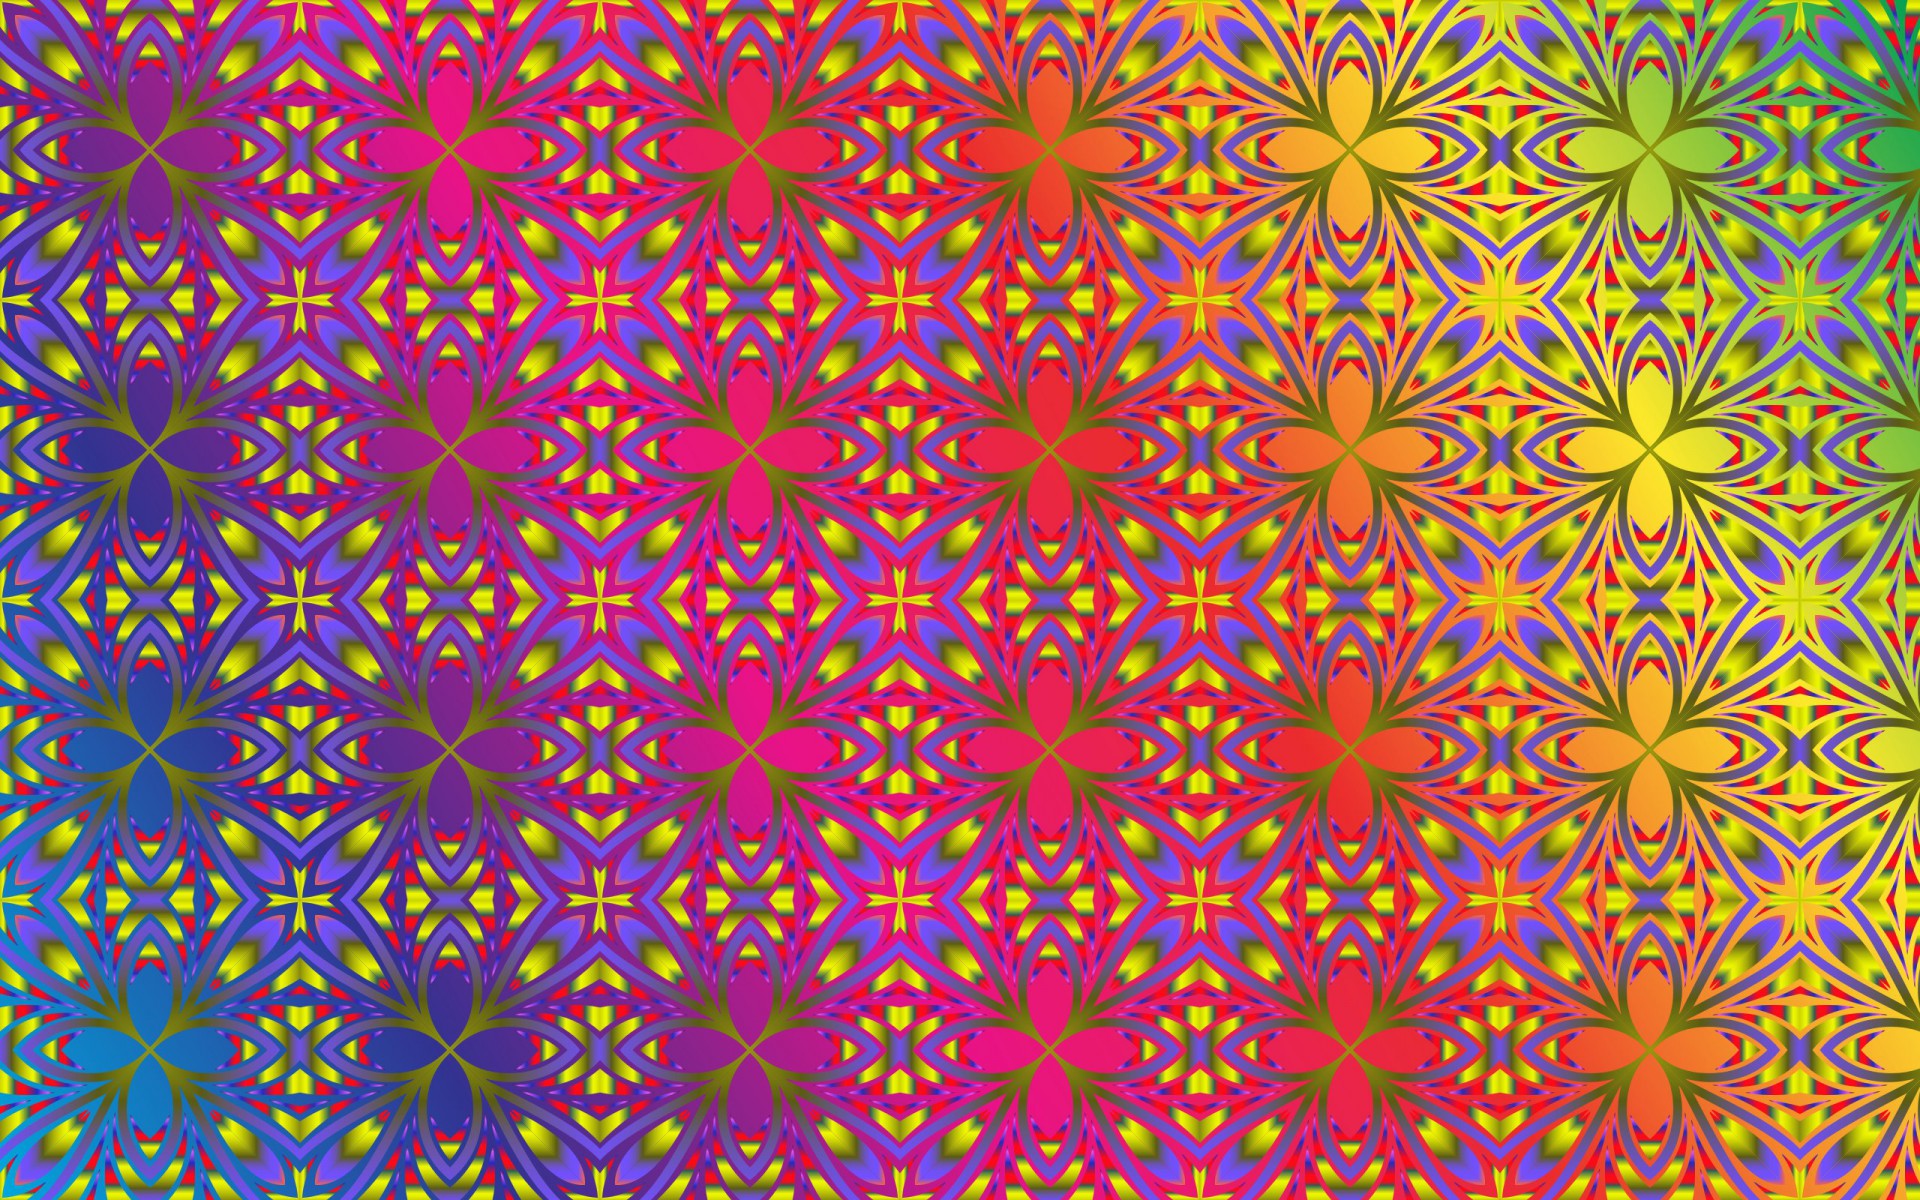 Tapeta, obrázek Ornamenty - 1920x1200 px. Wallpaper na plochu PC zdarma